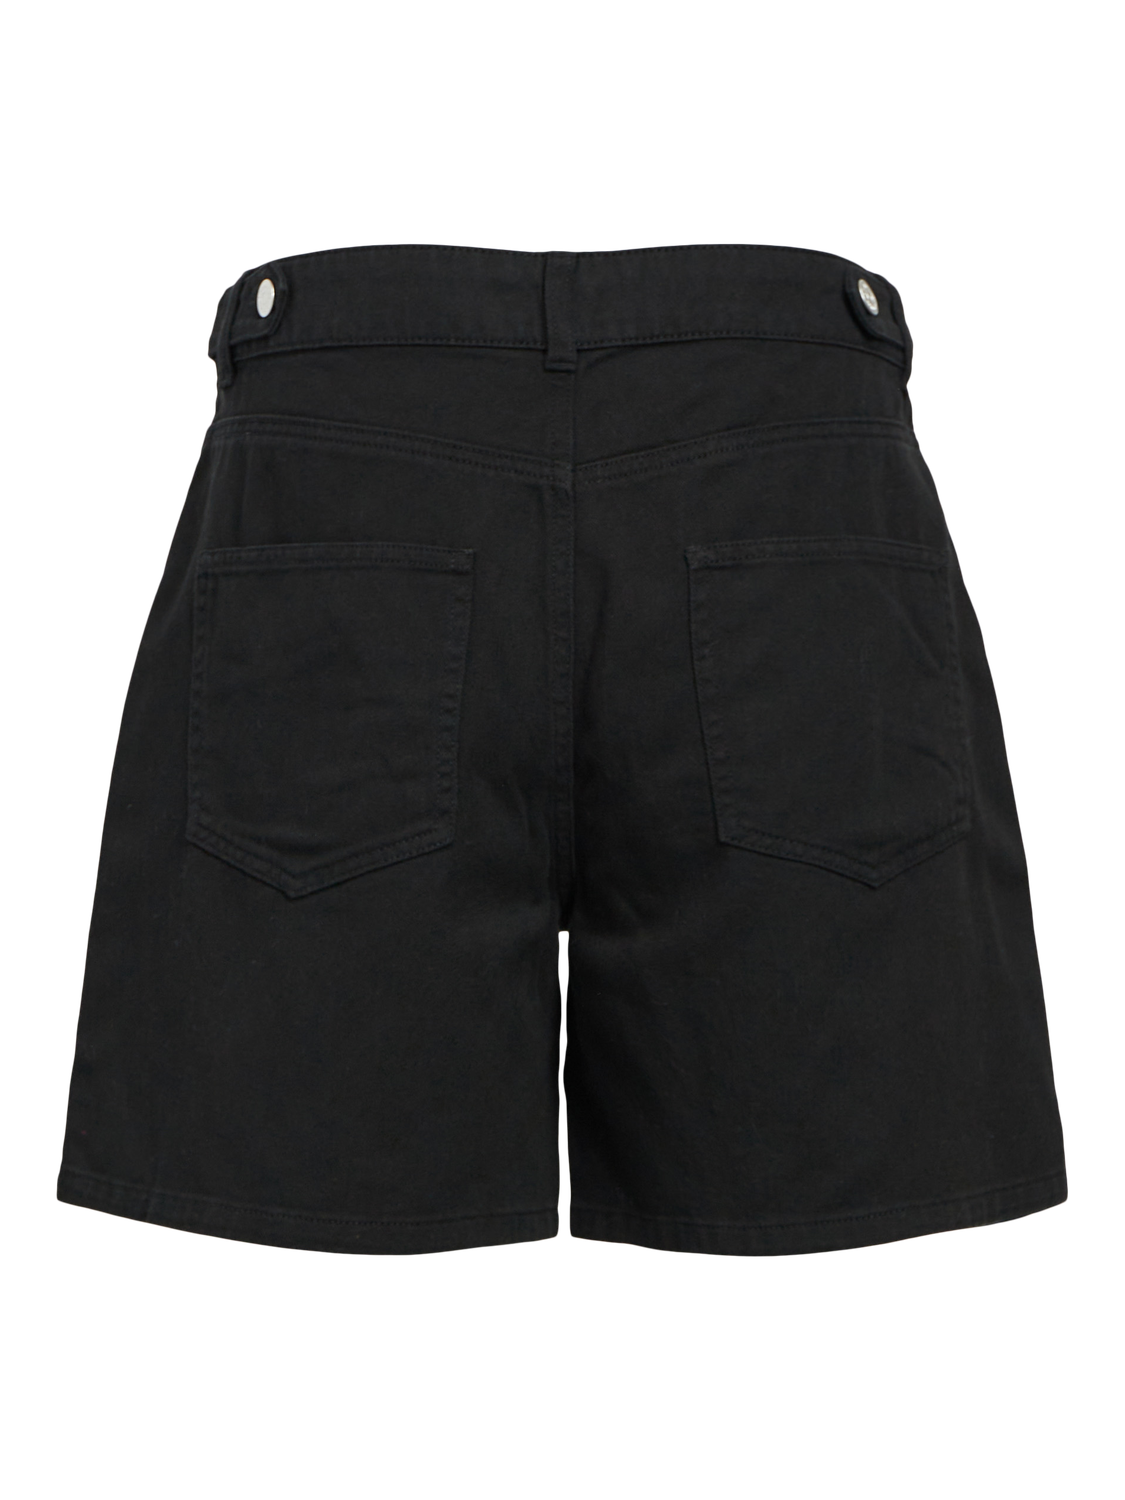 OBJGLORY Shorts - Black